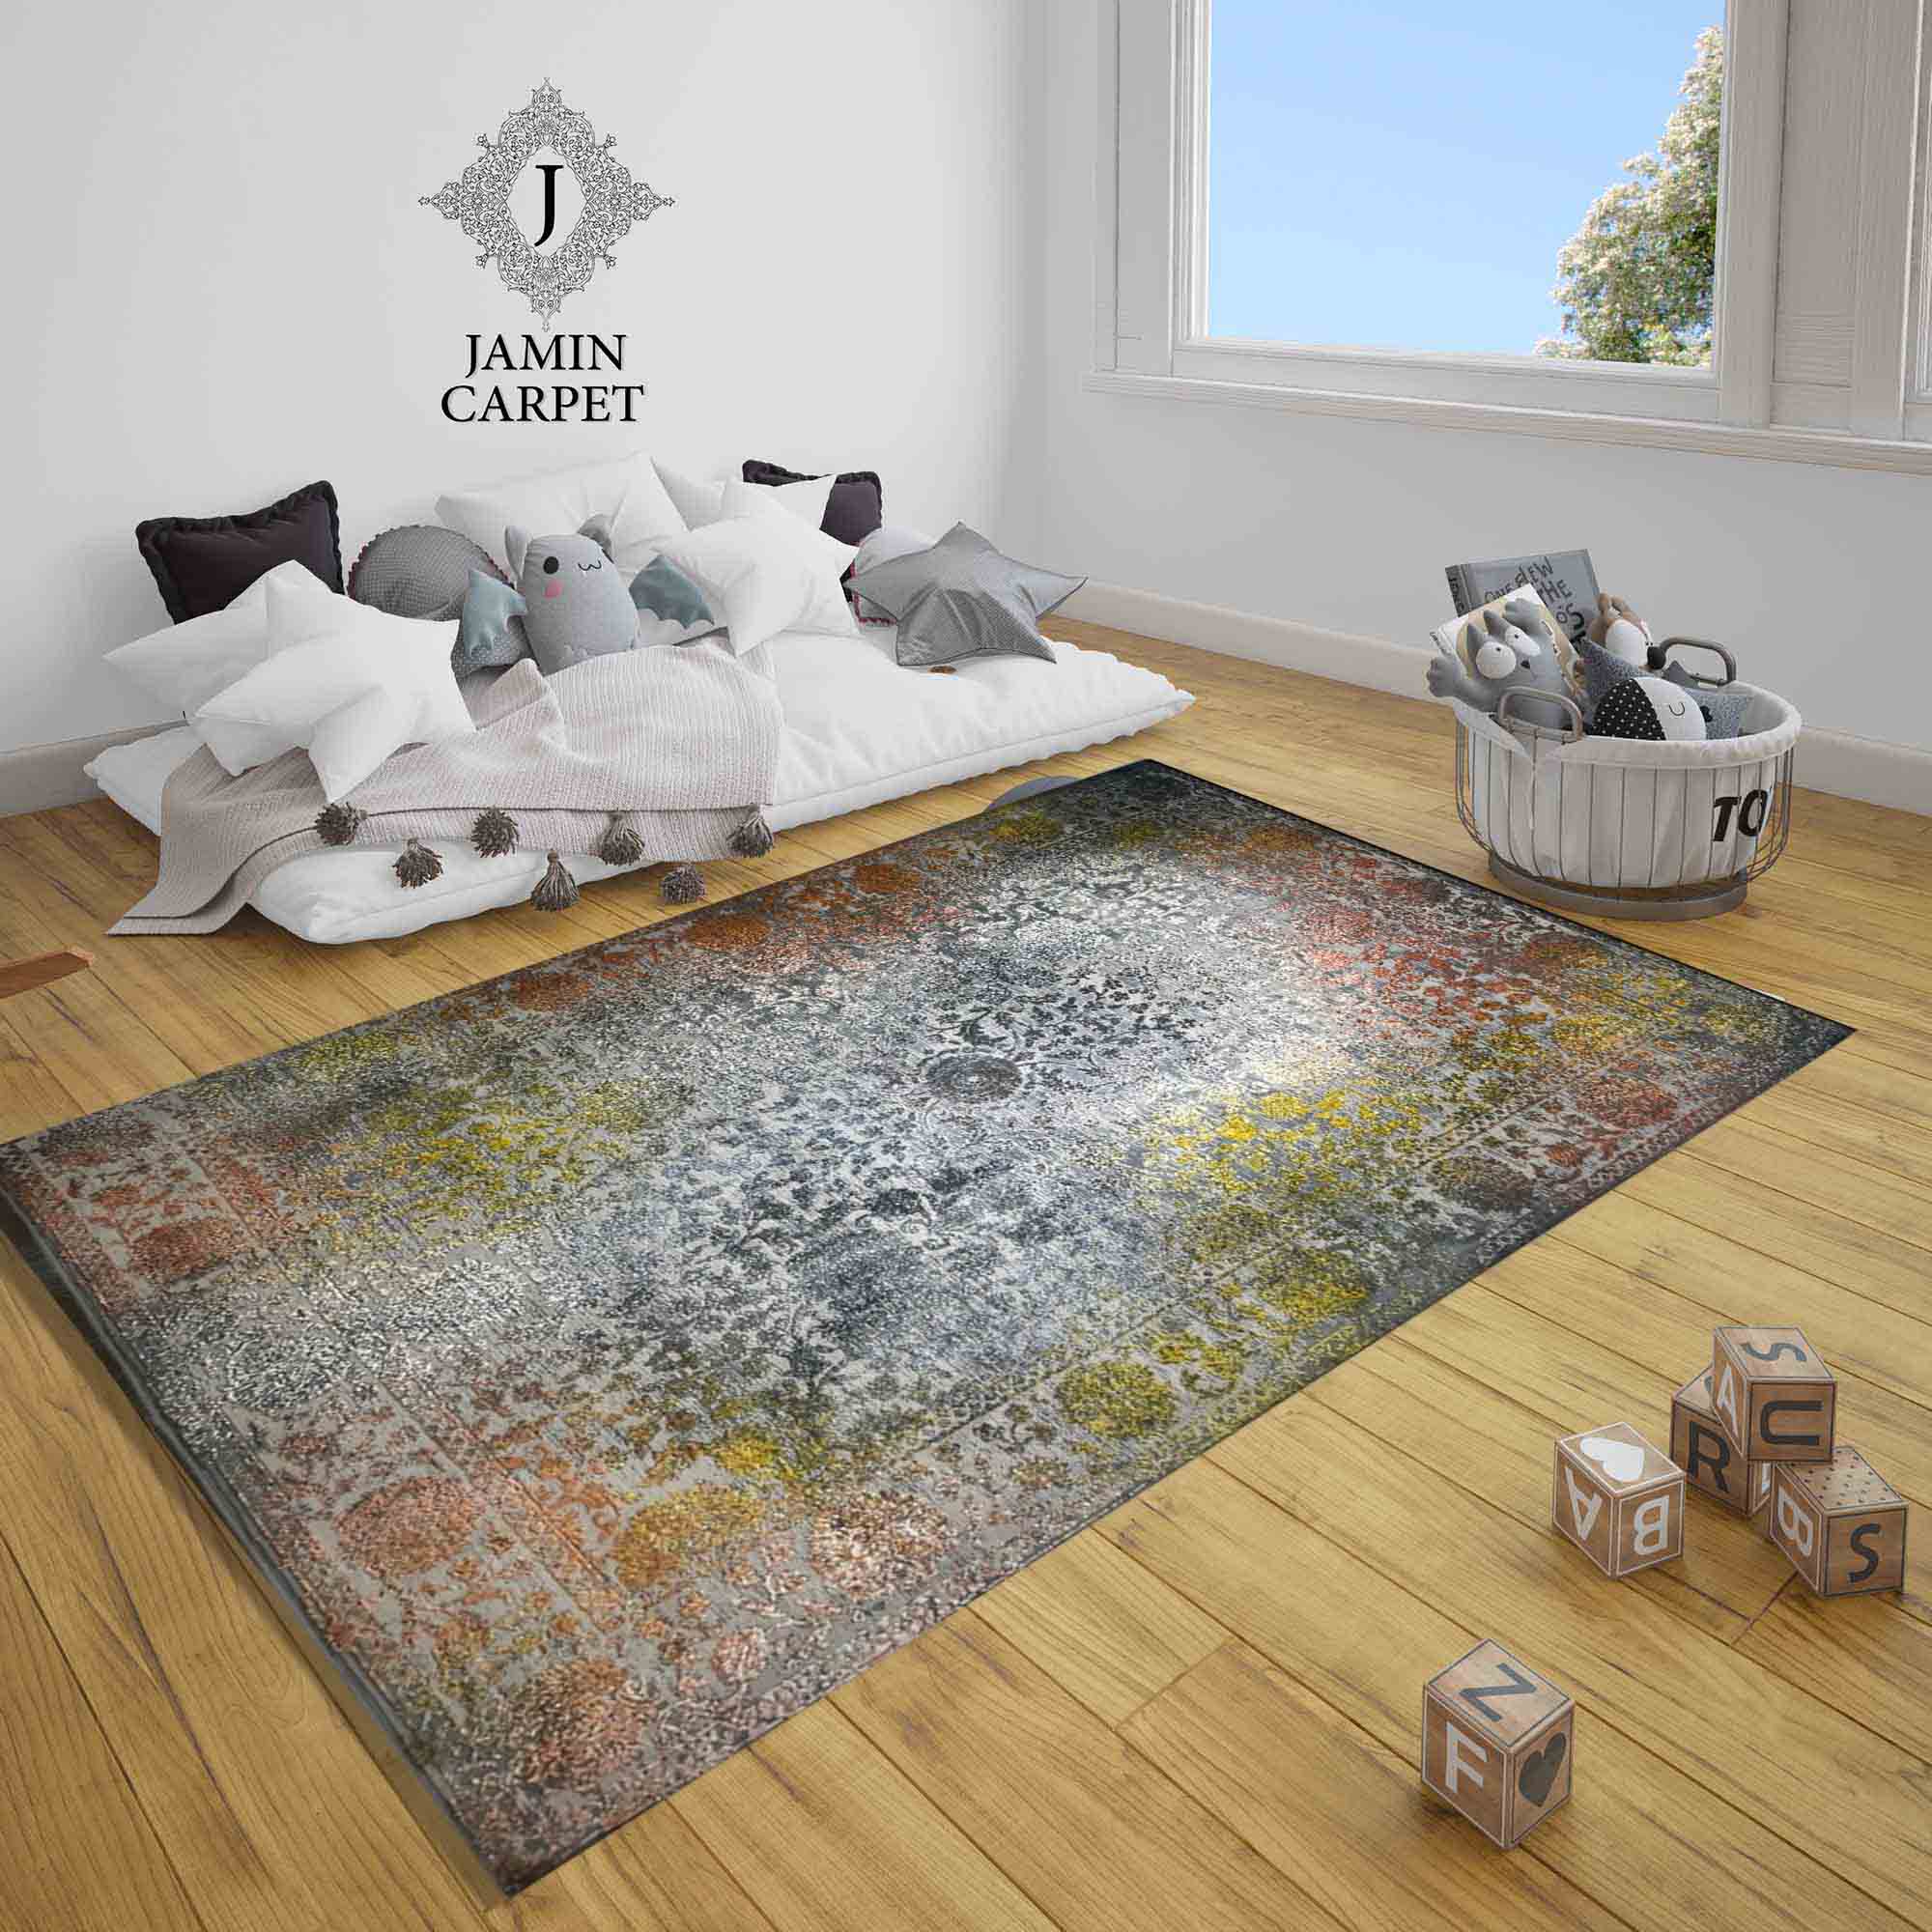 Fantasy carpet code 222 comb 400 density 1800 all acrylic